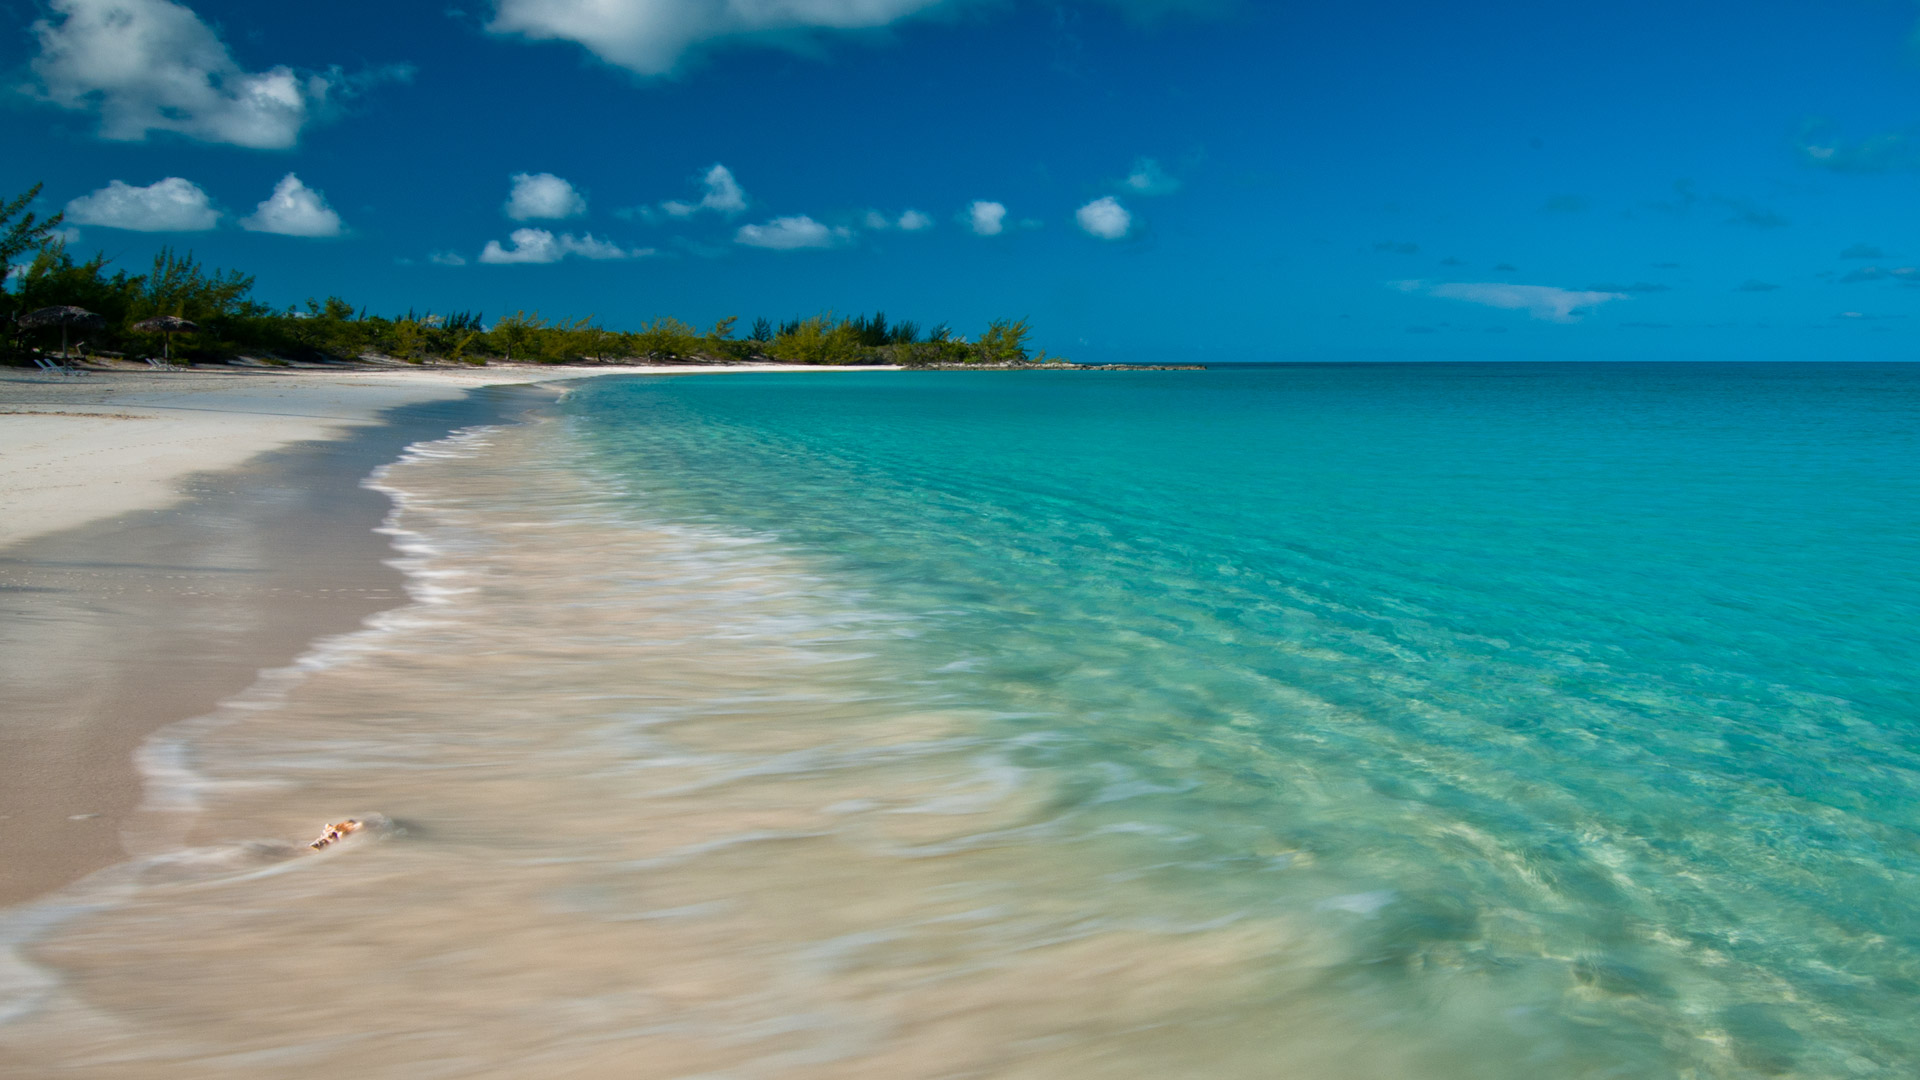 Background Wallpaper Bahamas Beautiful Beaches Ron Mayhew